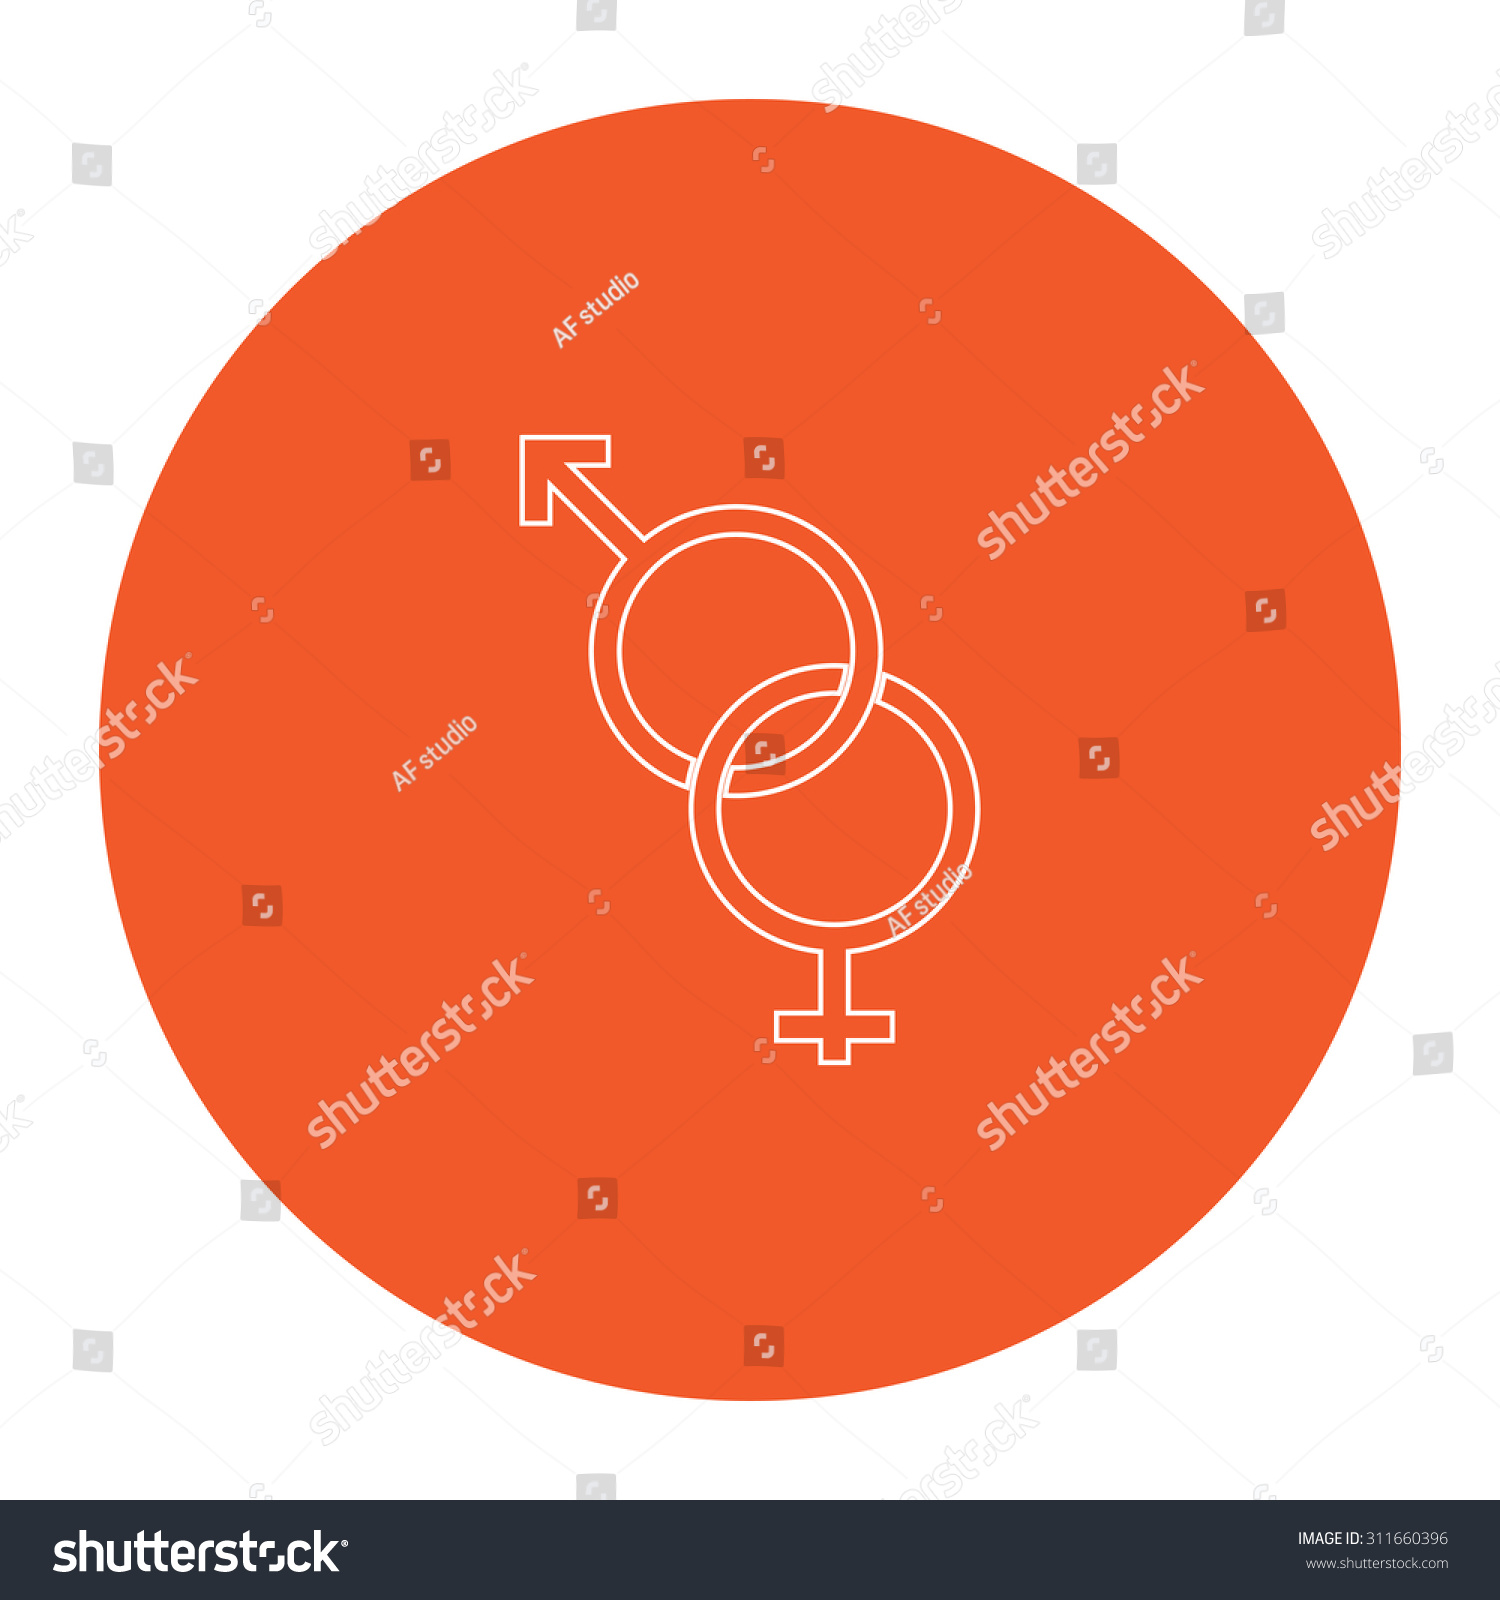 Twisted Male Female Sex Symbol Flat Stock Illustration 311660396 Shutterstock 